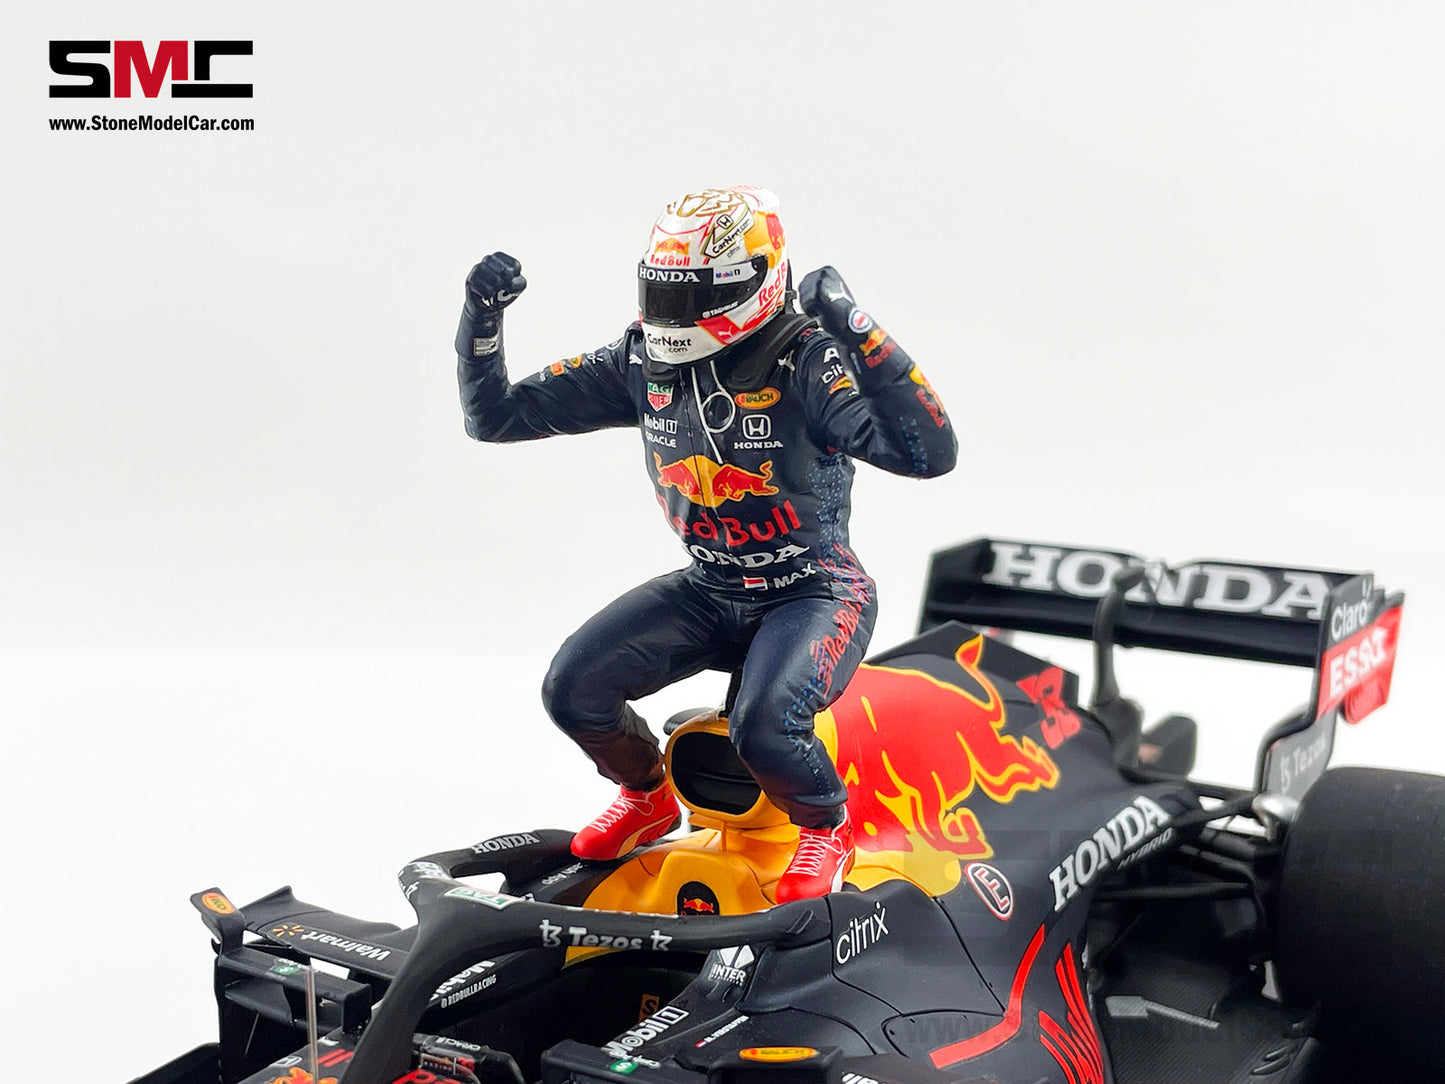 2021 F1 World Champion #33 Max Verstappen Red Bull RB16B Monaco GP 1:18 Spark with Figure